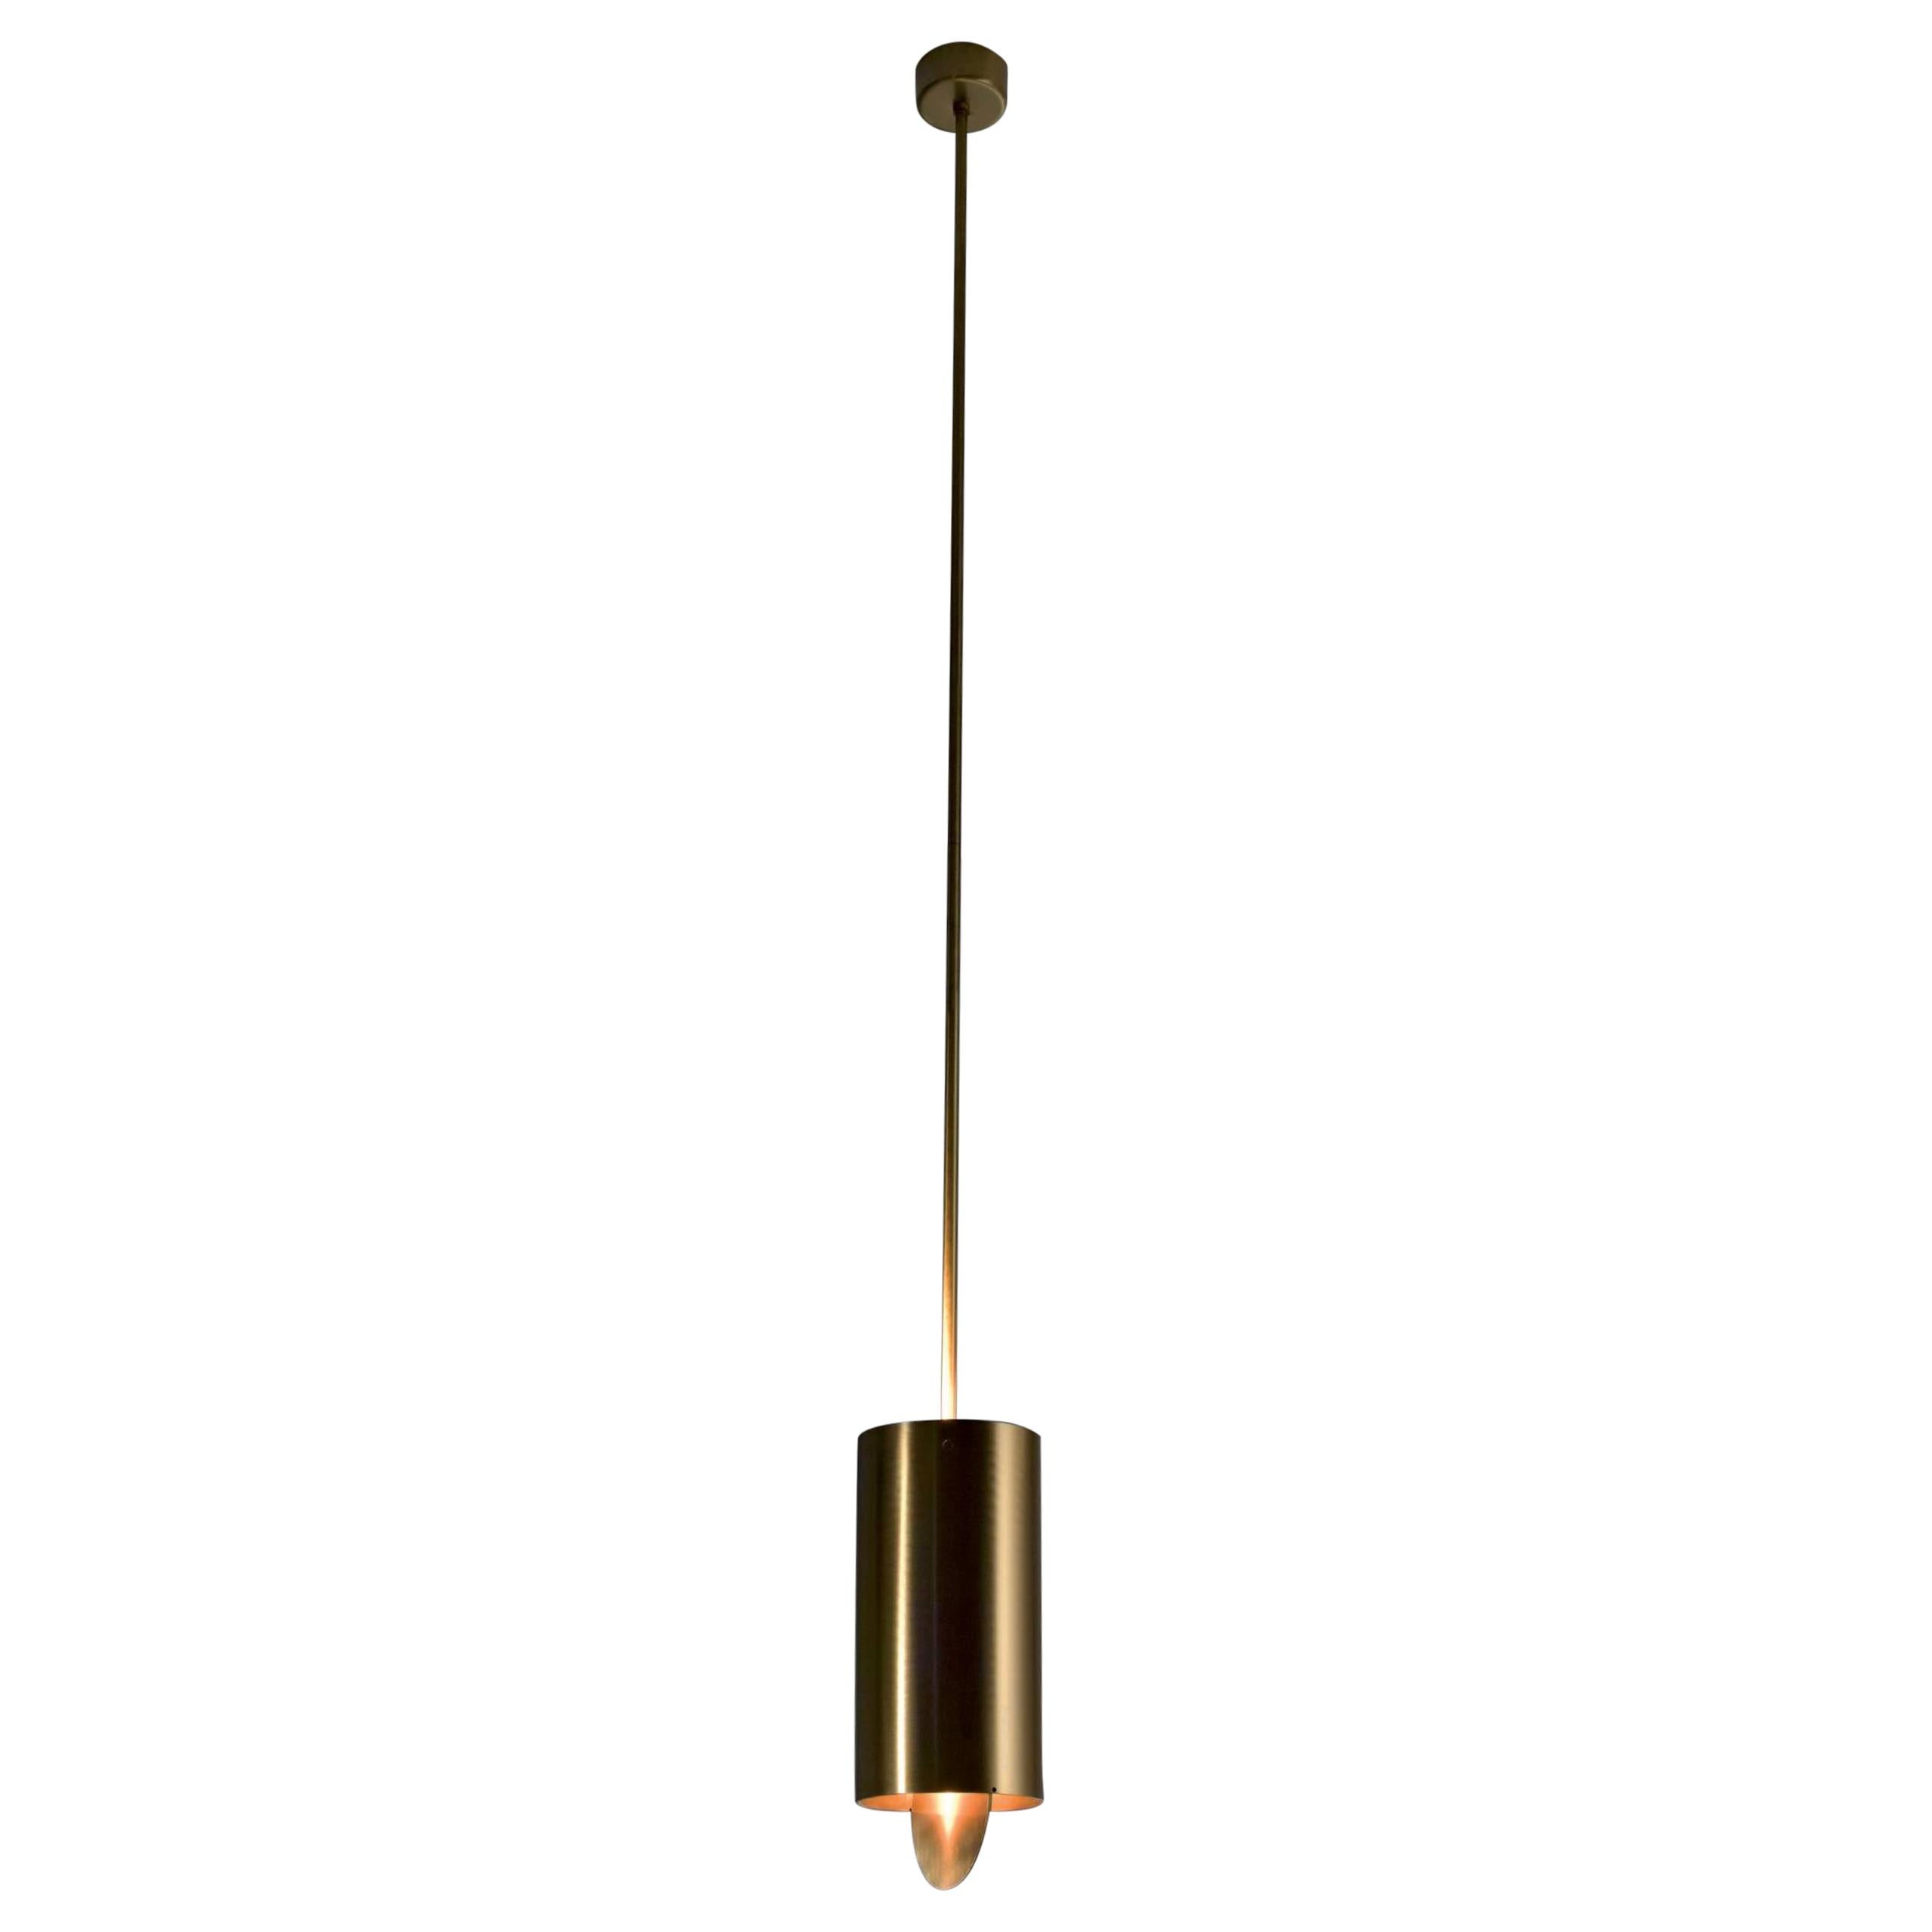 Laurameroni "Tubo Sospensione MF 40" modern Ceiling Pendant Lamp in satin brass For Sale